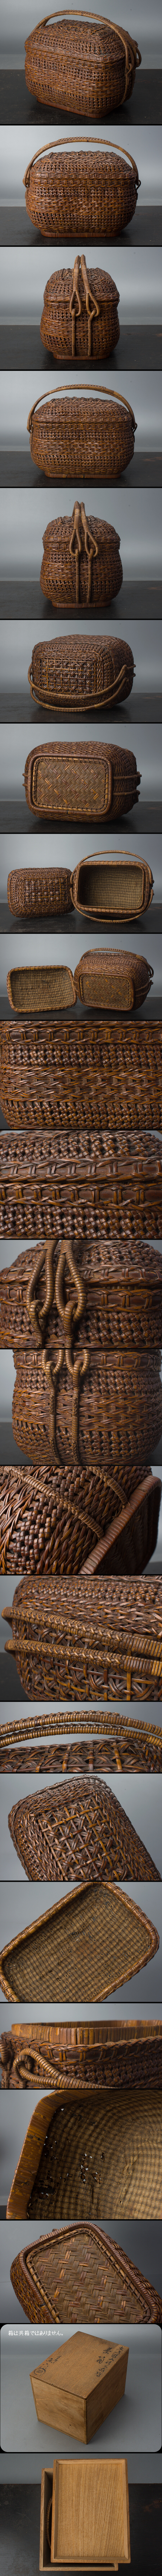 保証規定古い茶籠　籐組　籠　内は古布 木工、竹工芸